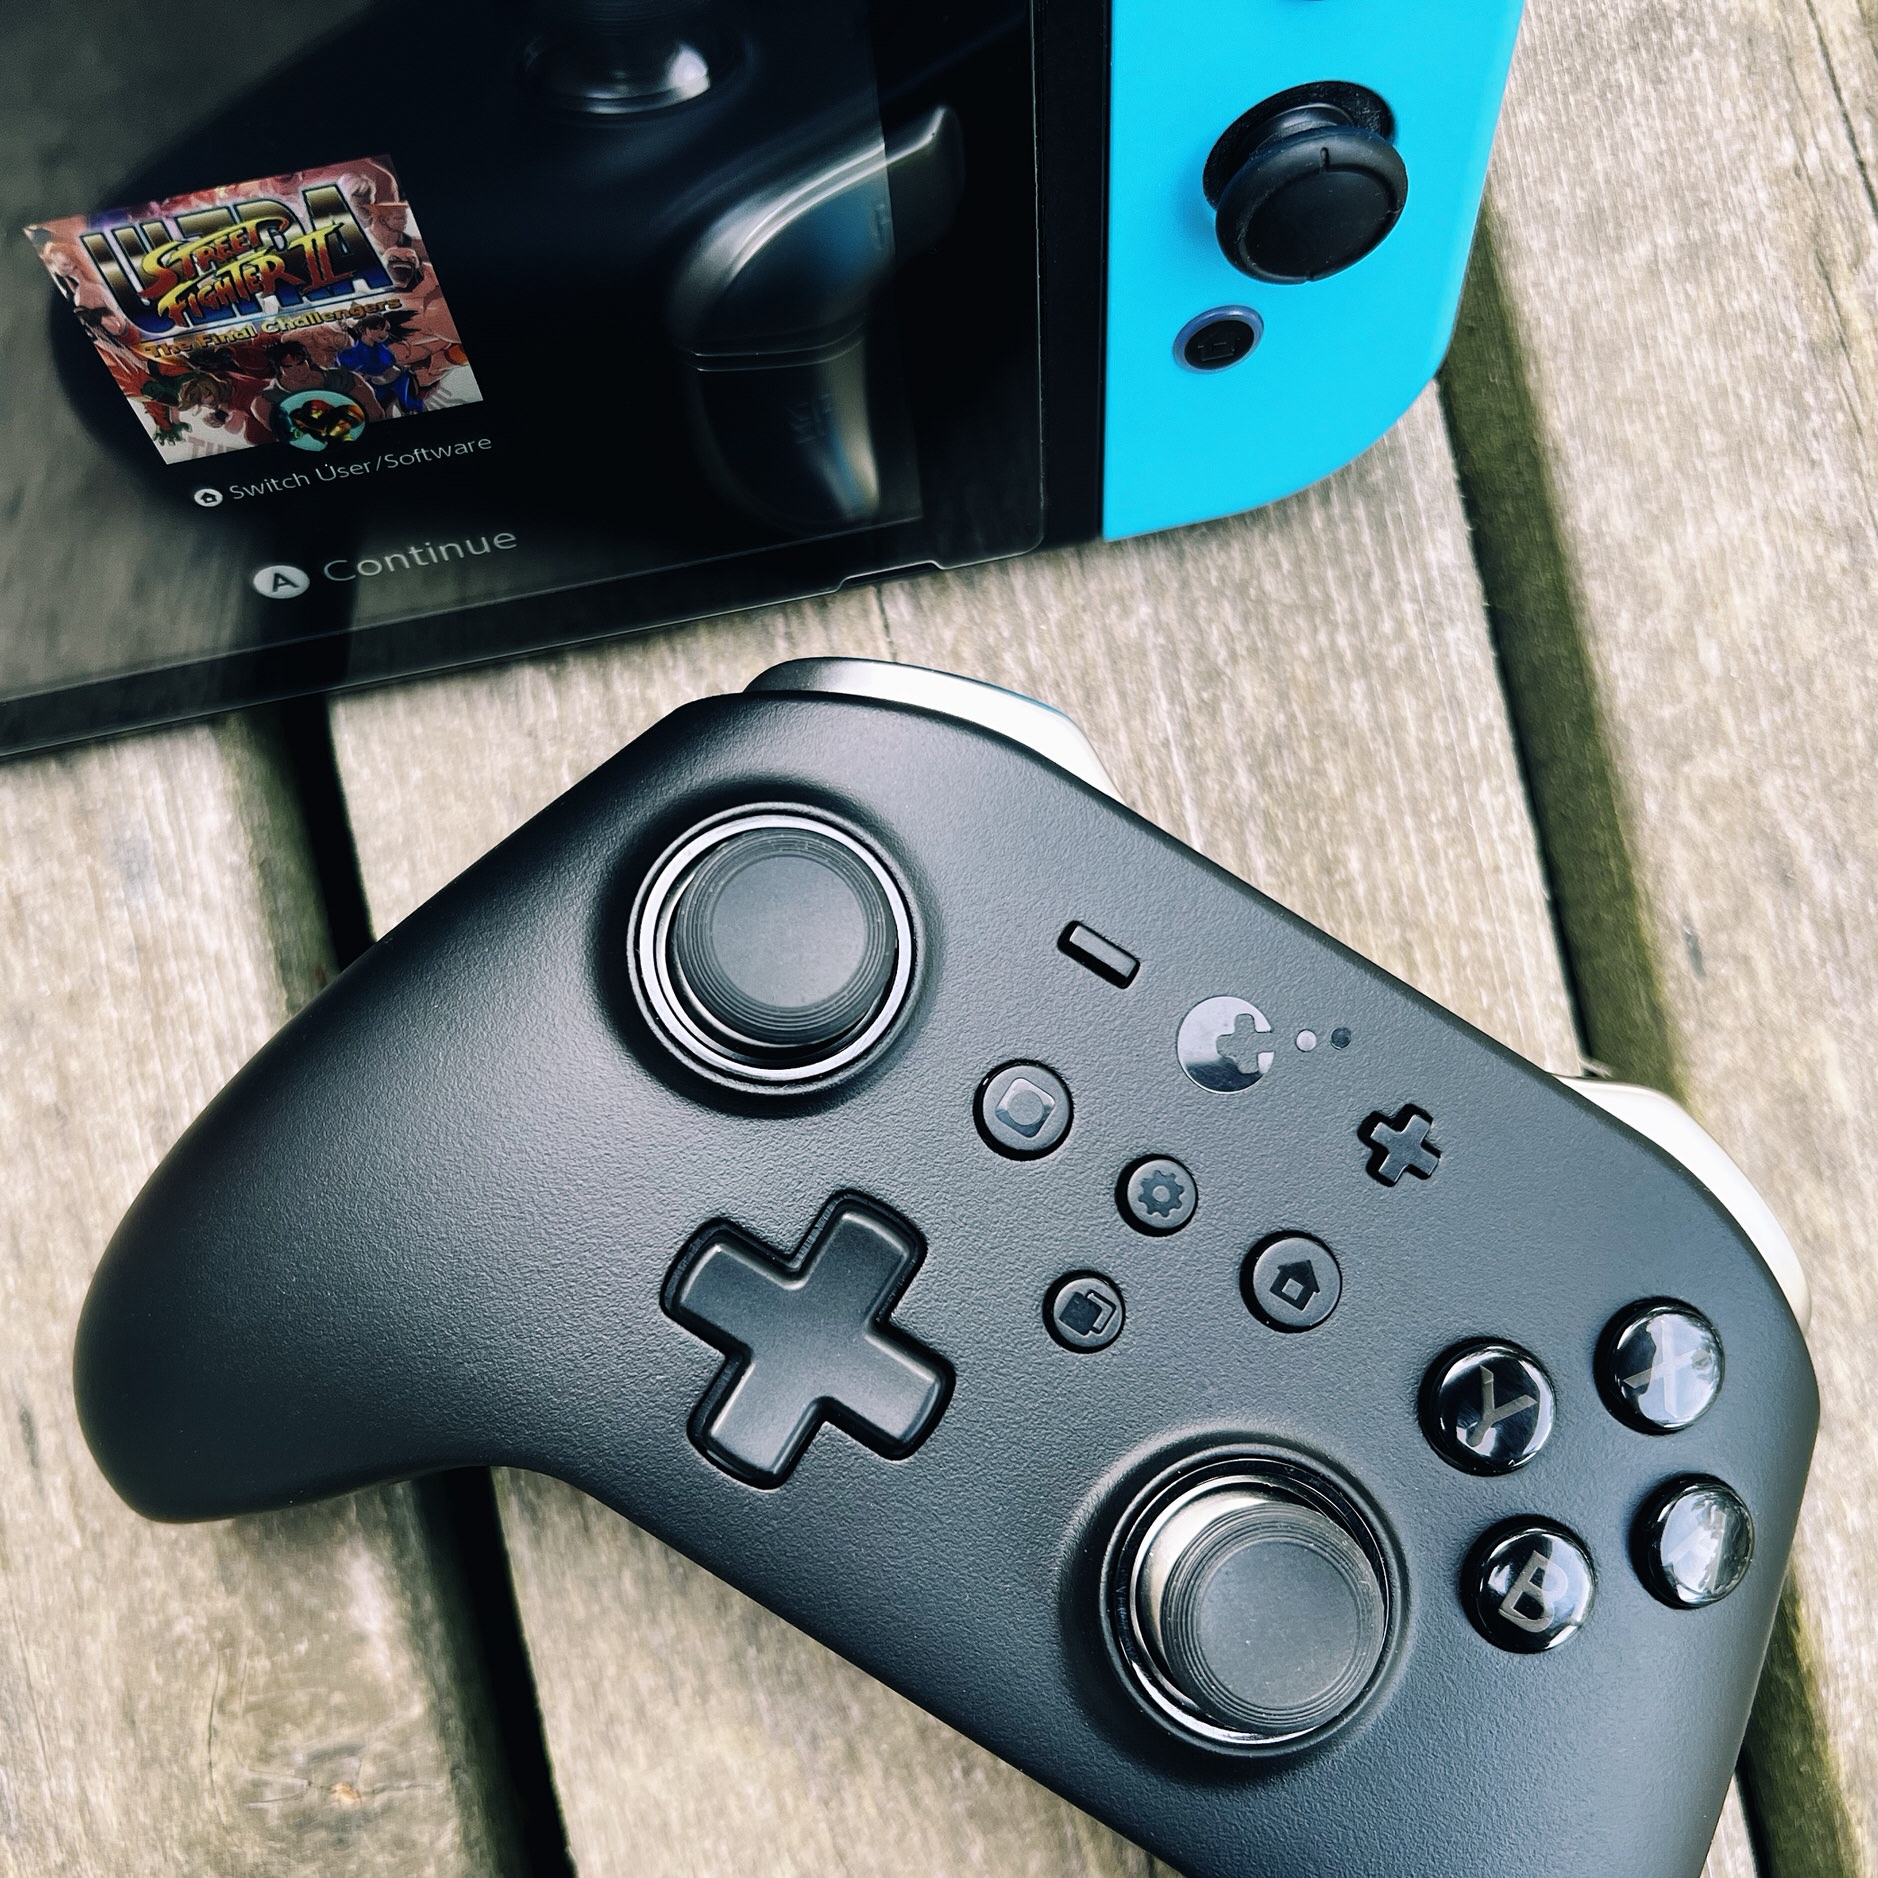 KingKong 2-Controller vor Nintendo Switch.